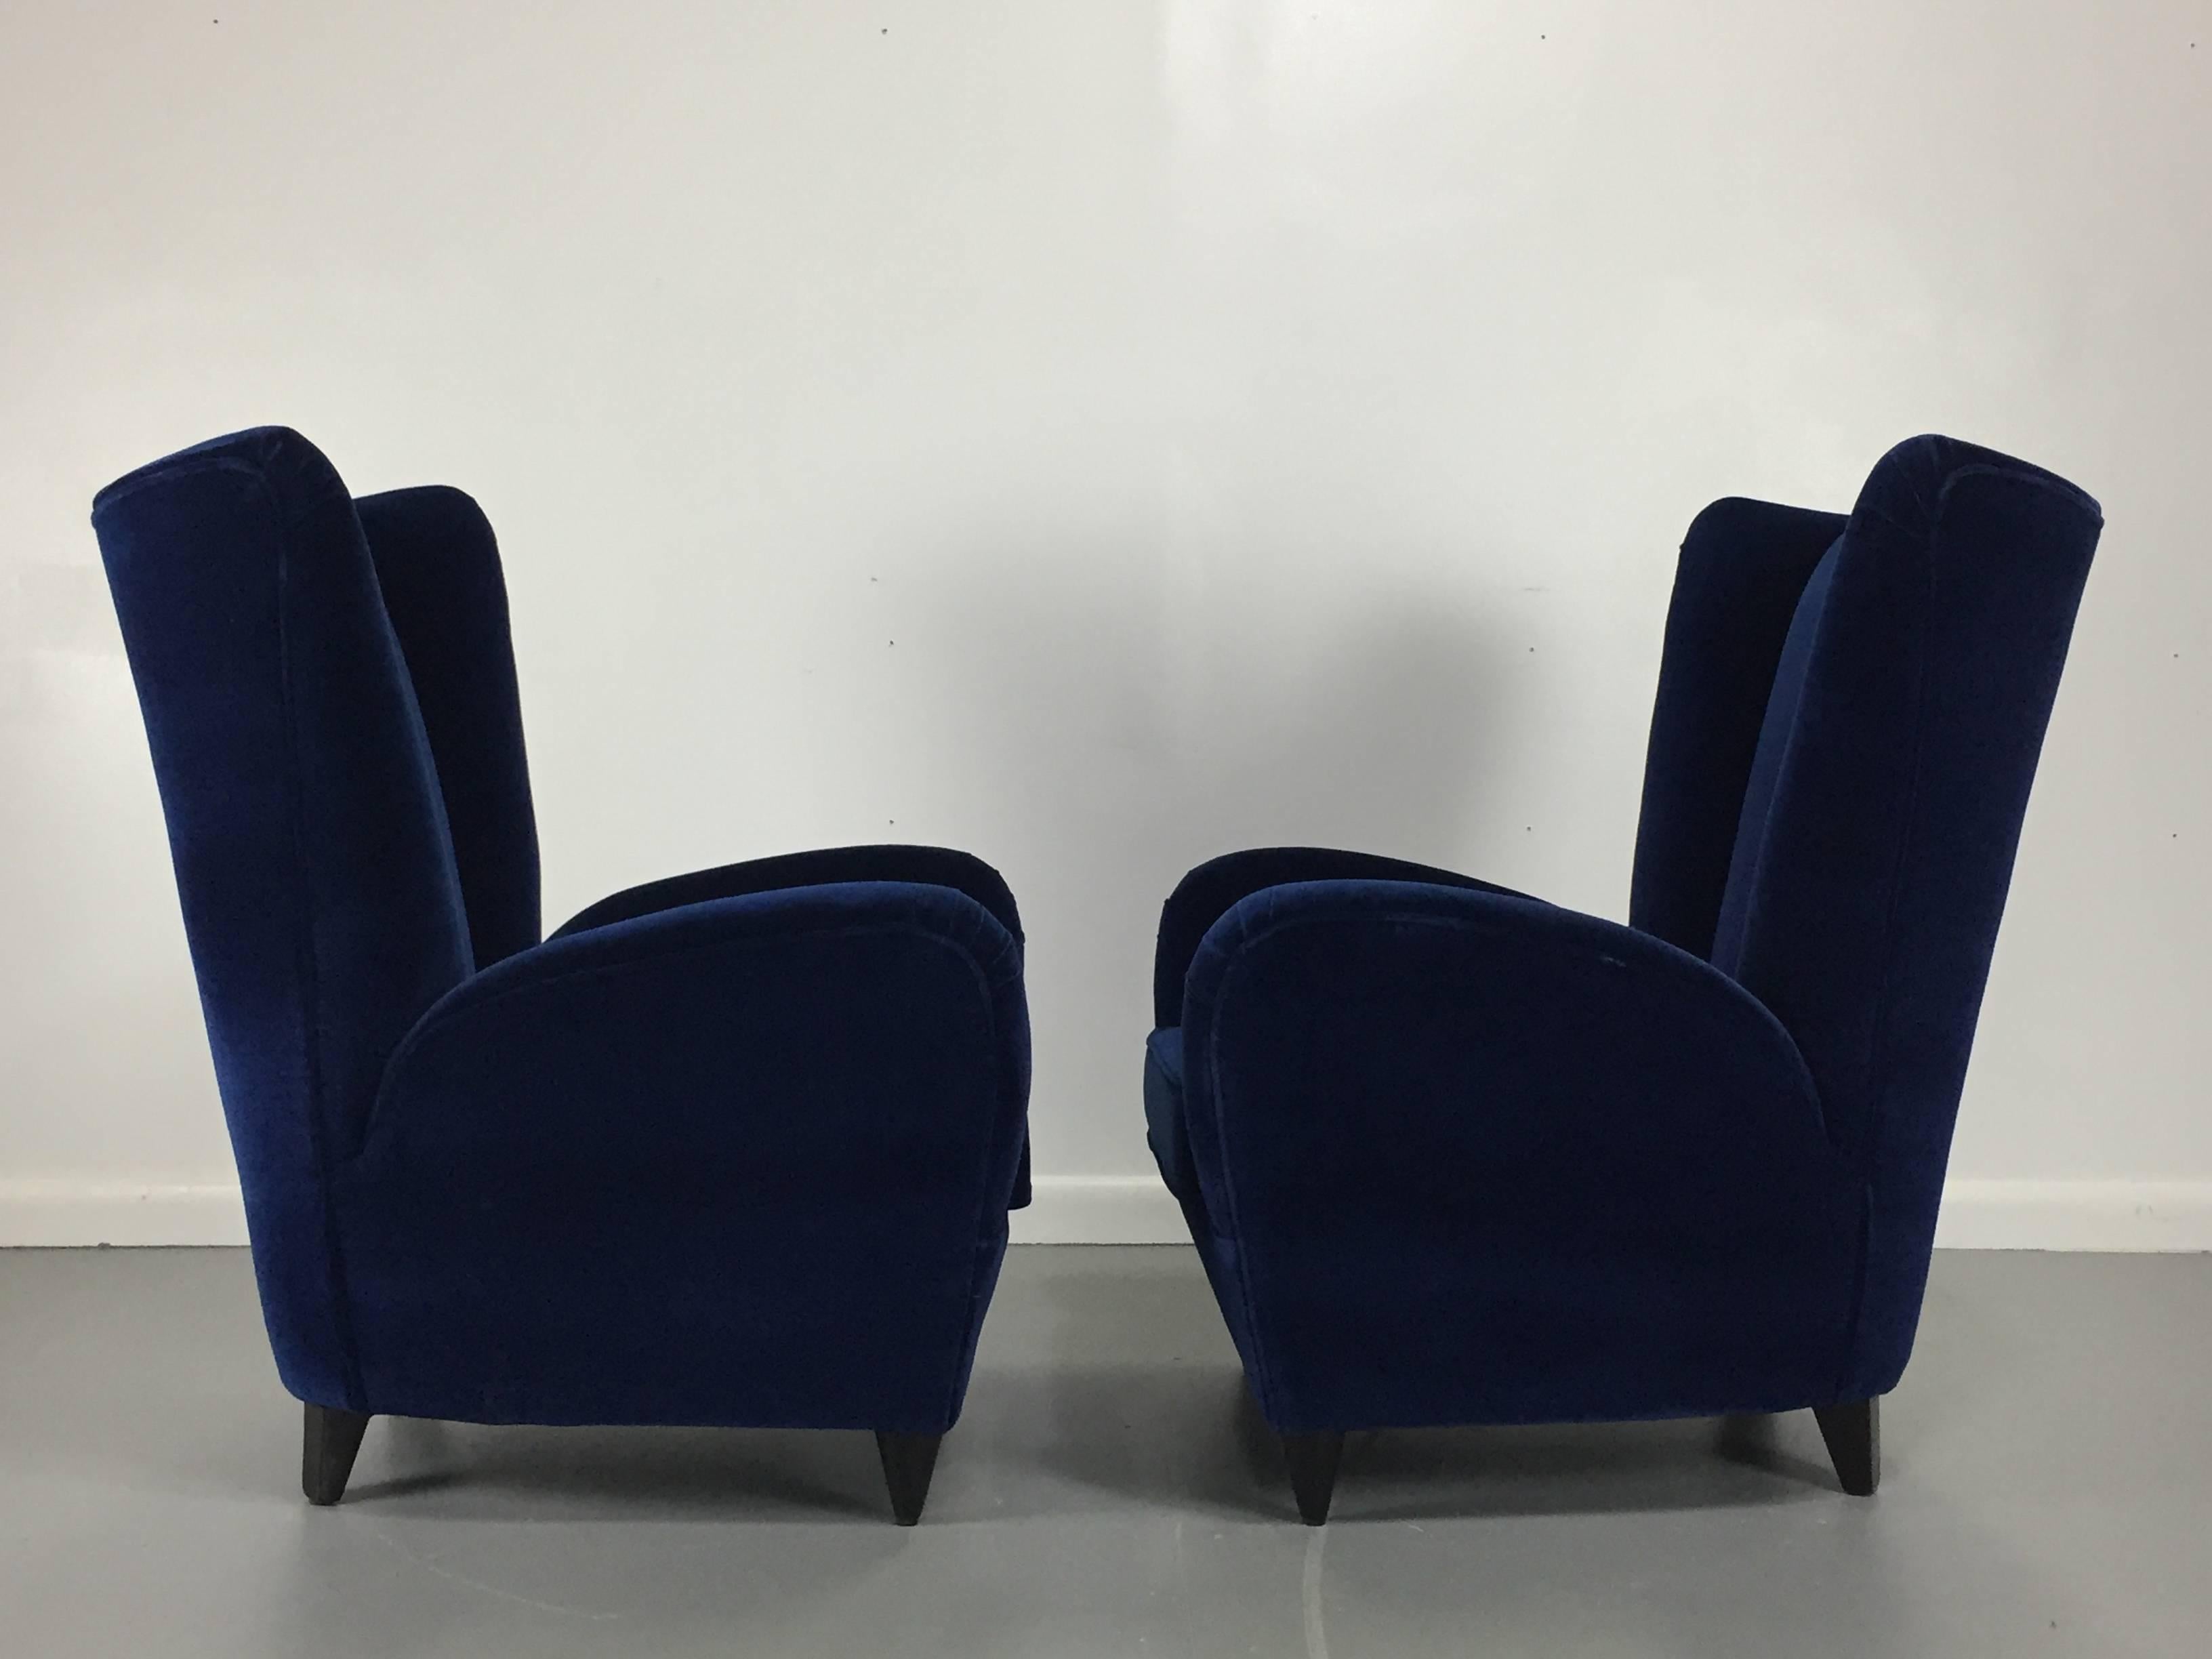 Ebonized Paola Buffa Lounge Chairs in Navy Velvet, a Pair